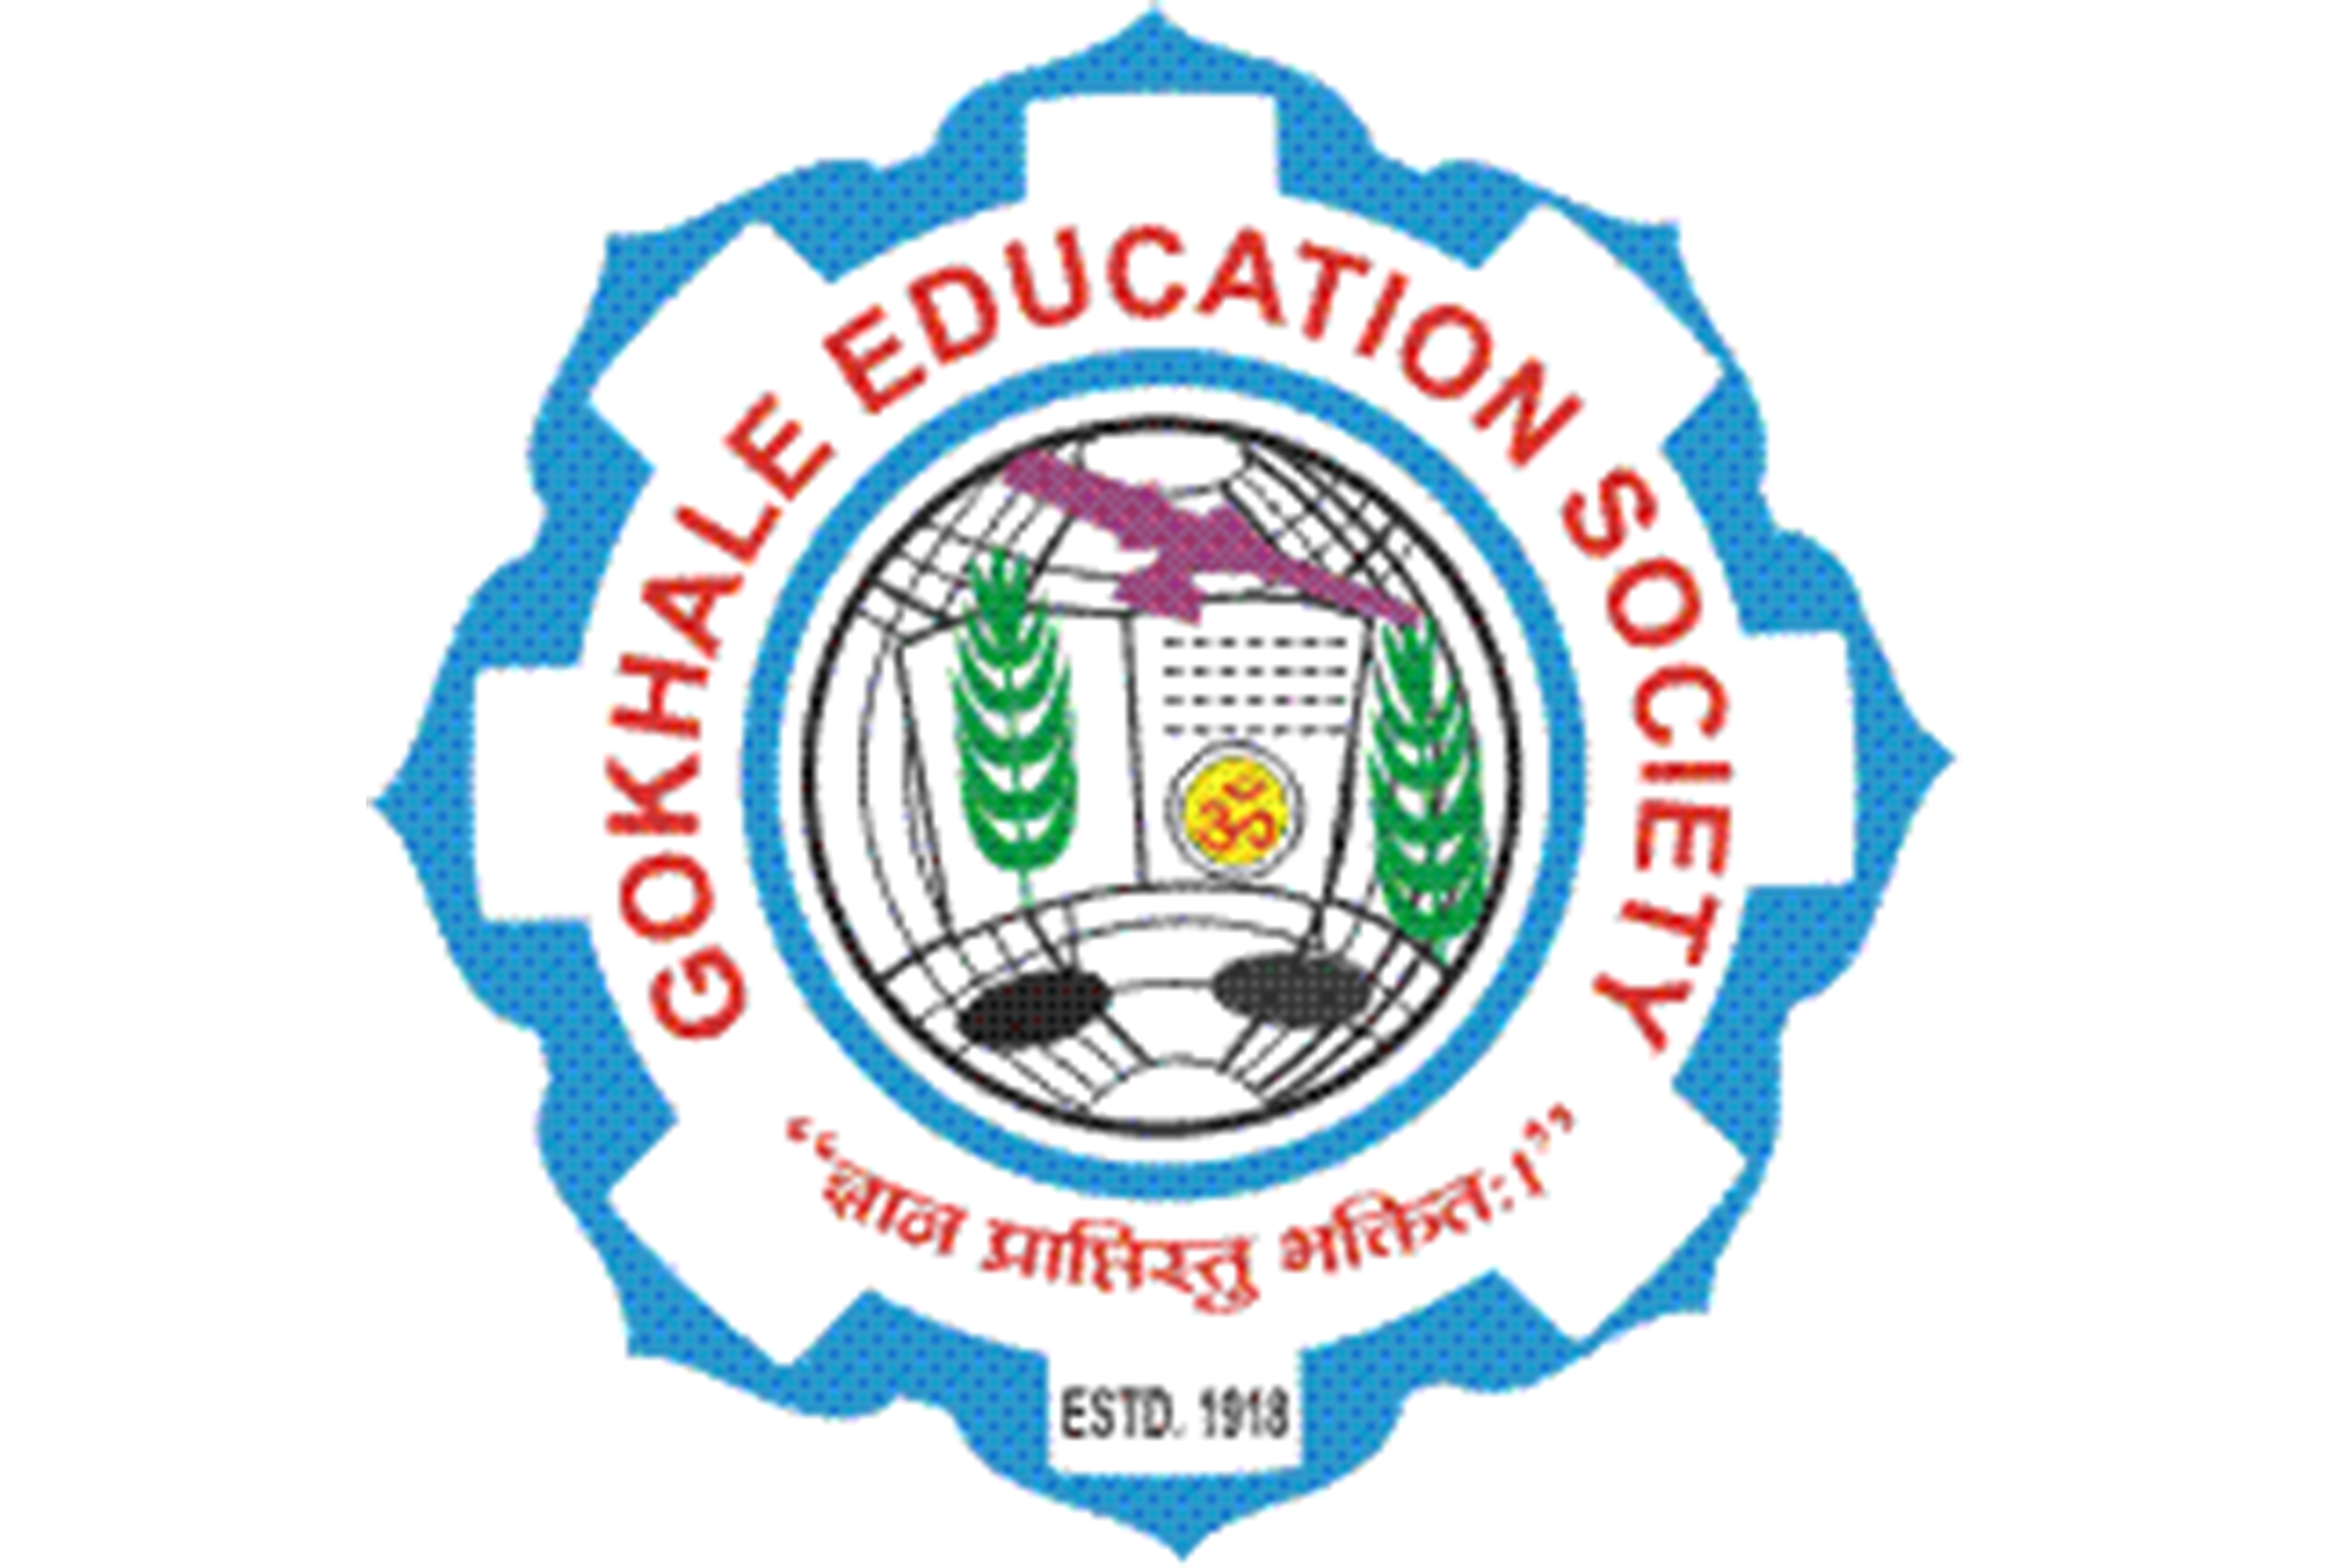 Jagruti construction ( Gokhale Education )